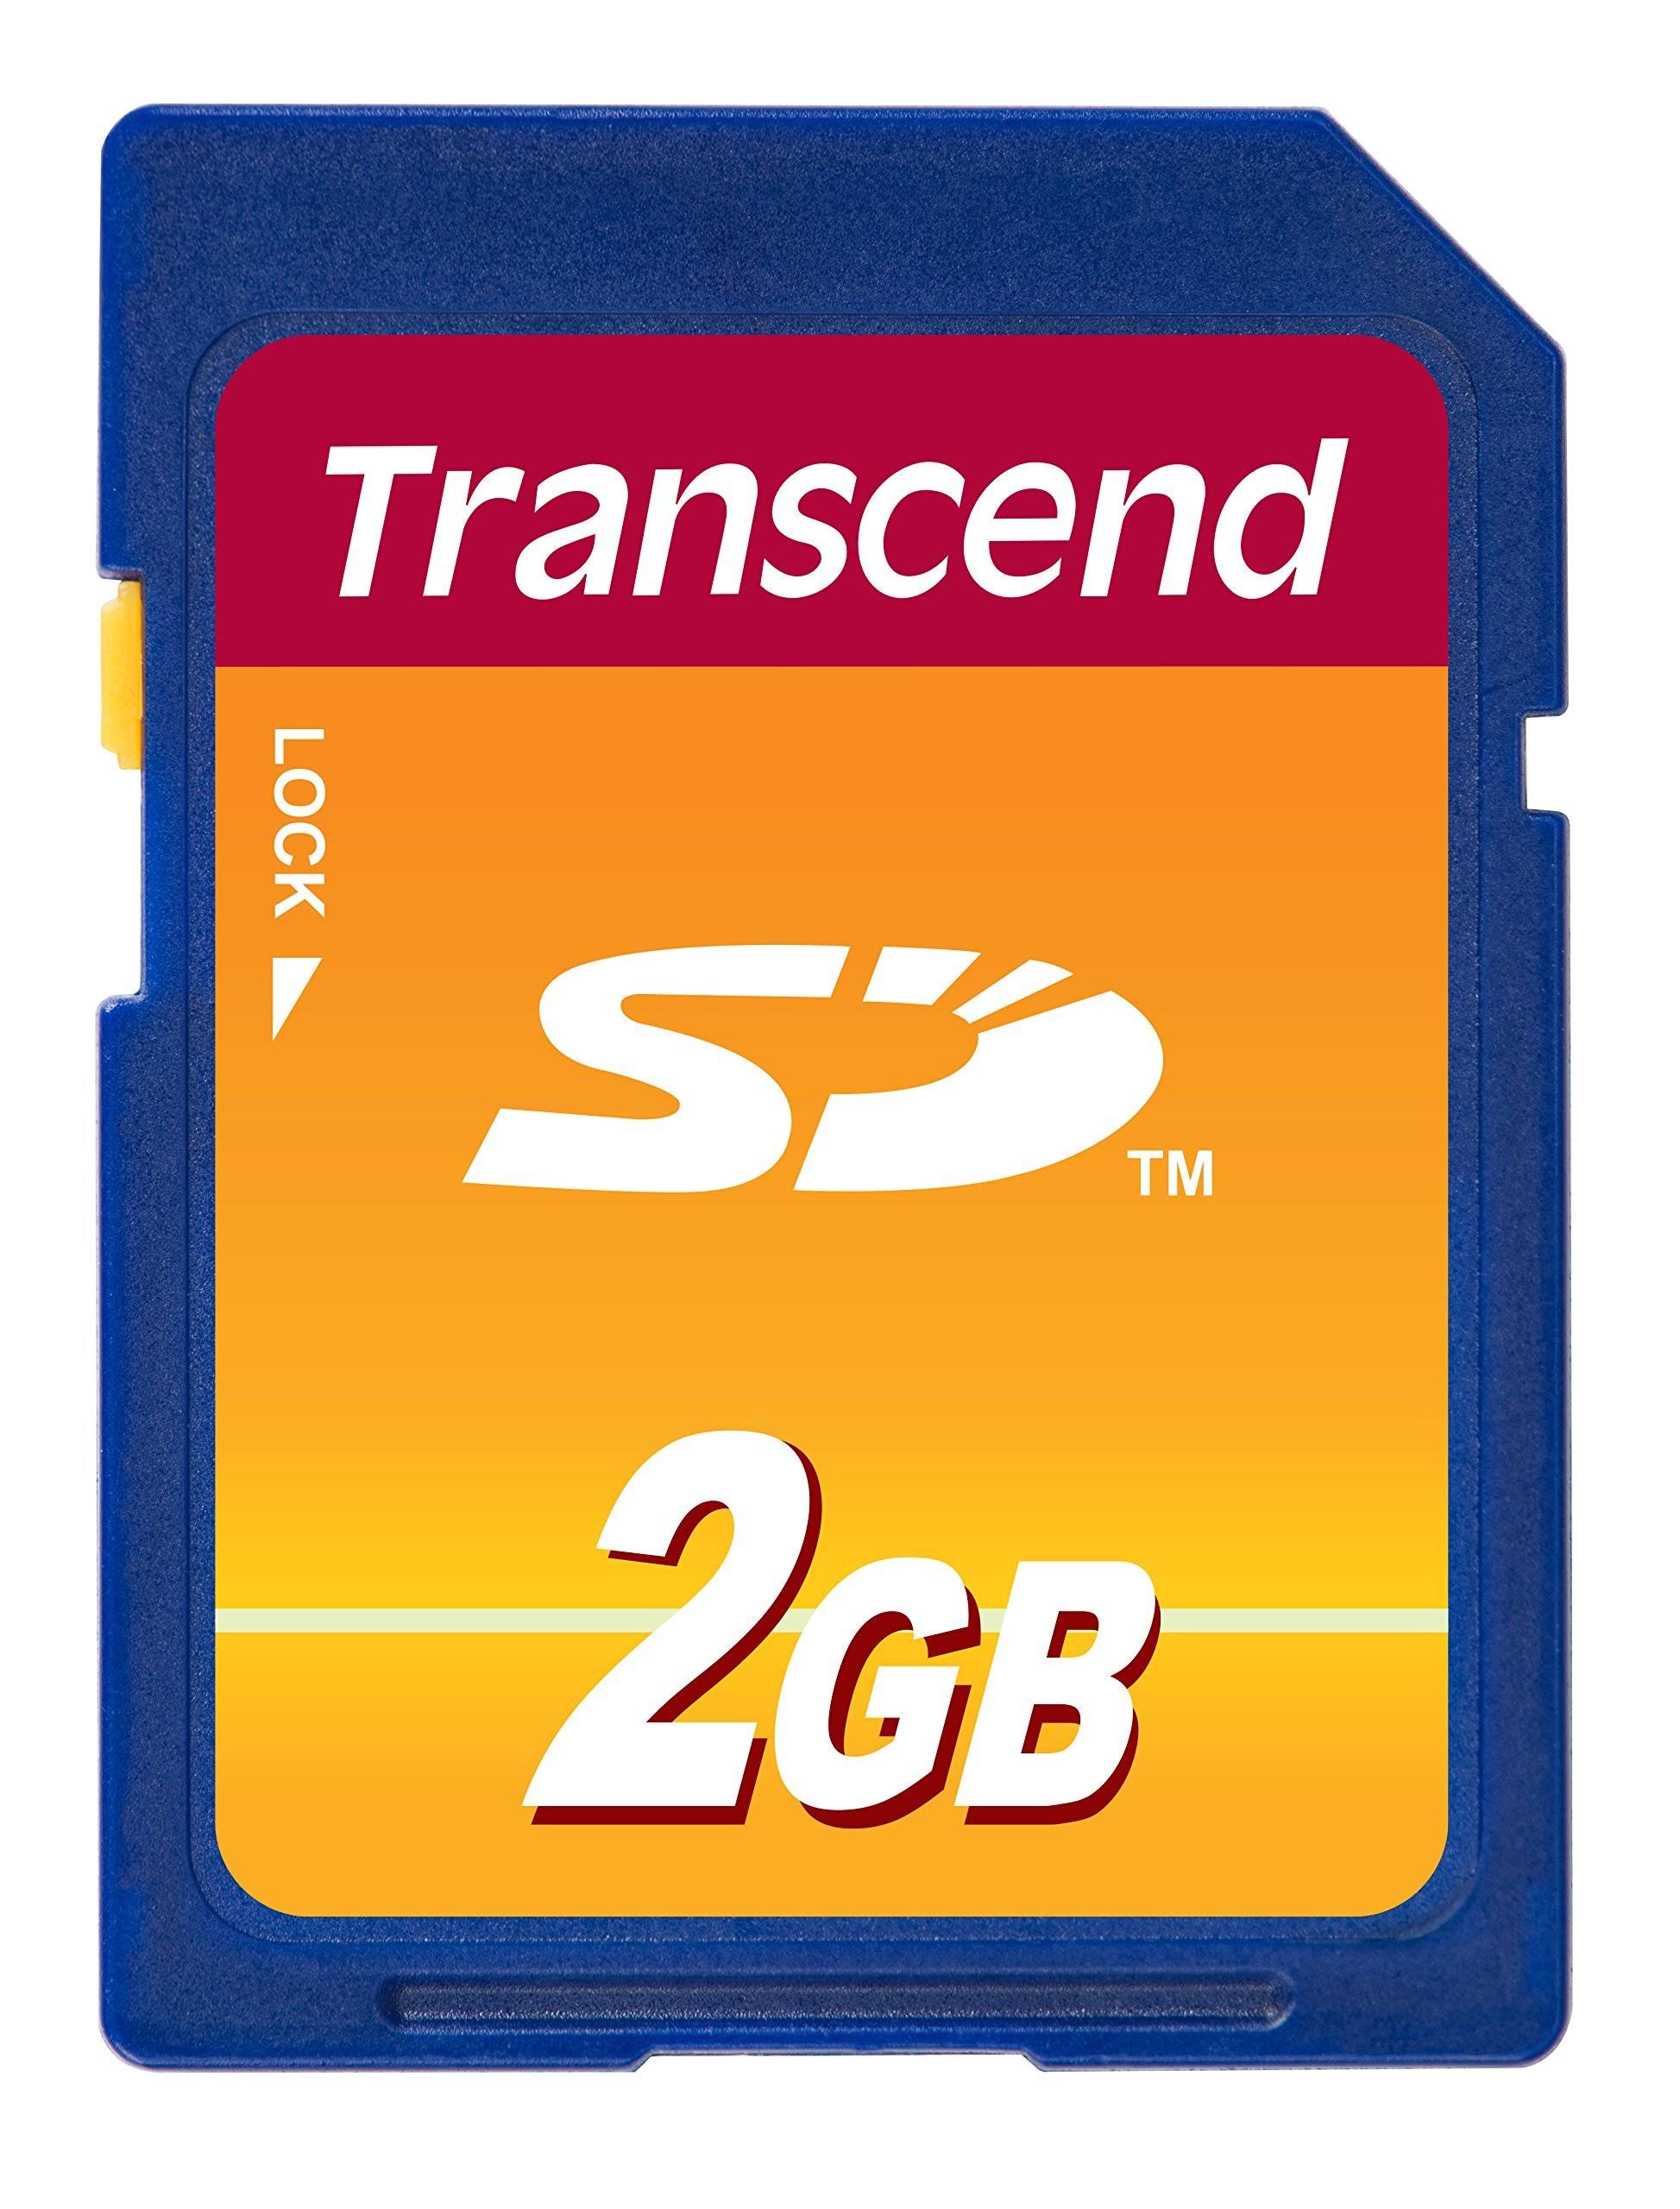 Transcend SD Flash Memory Card - 2GB